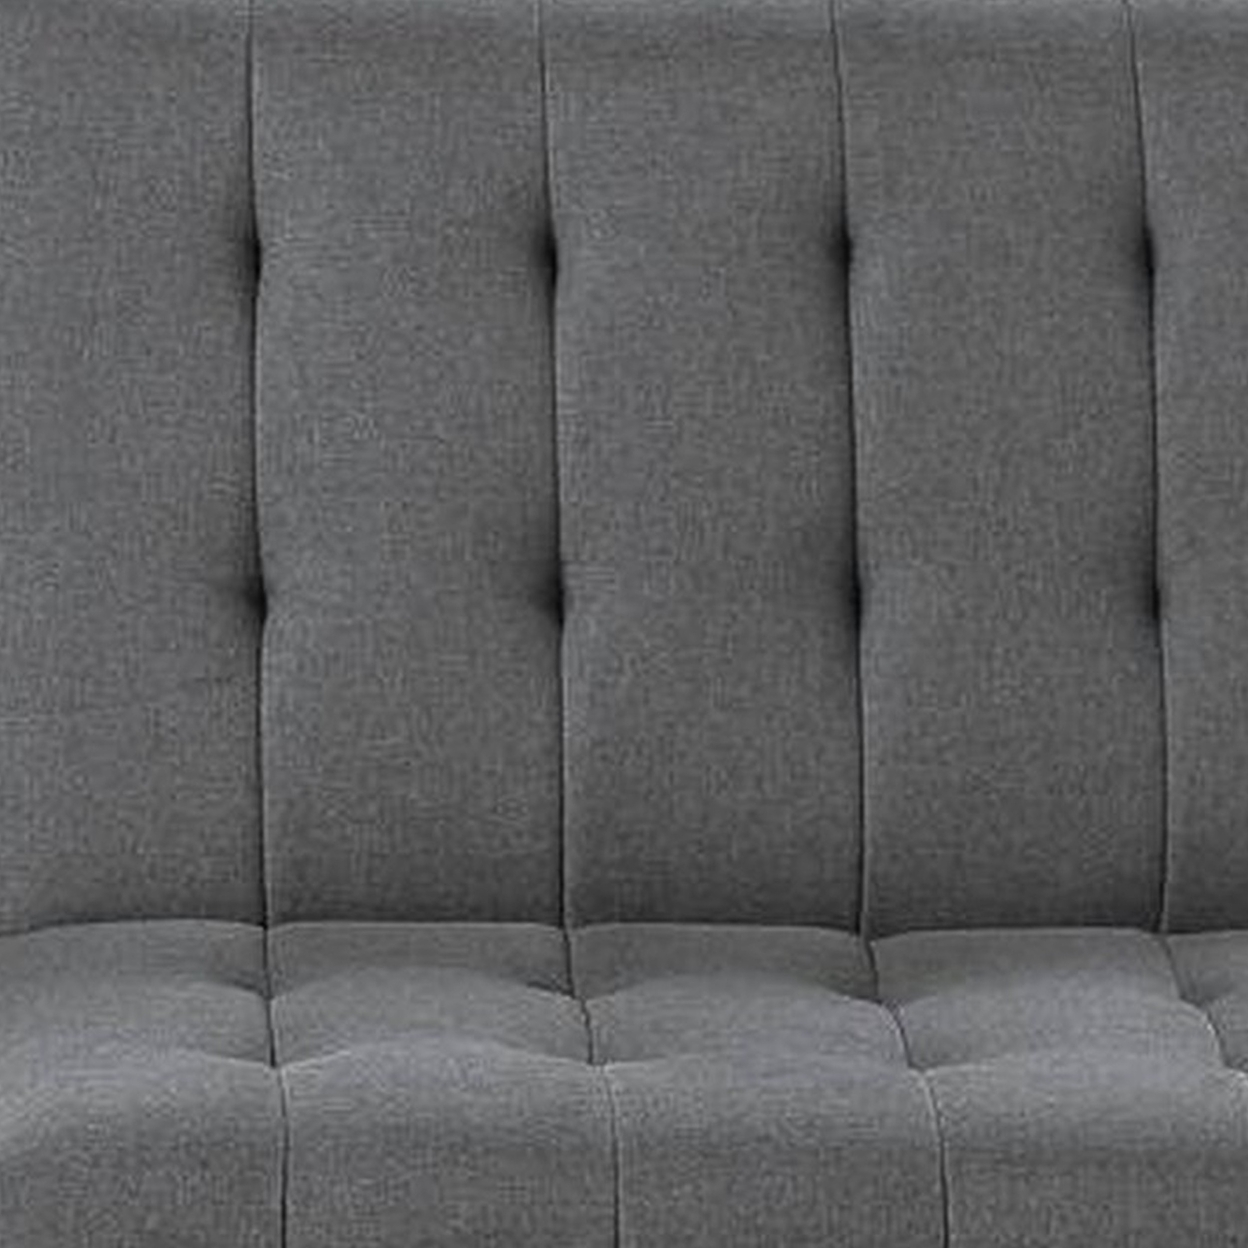 Ara 71 Inch Adjustable Futon Sofa Bed, Plush Cushioning, Tapered Legs, Gray- Saltoro Sherpi